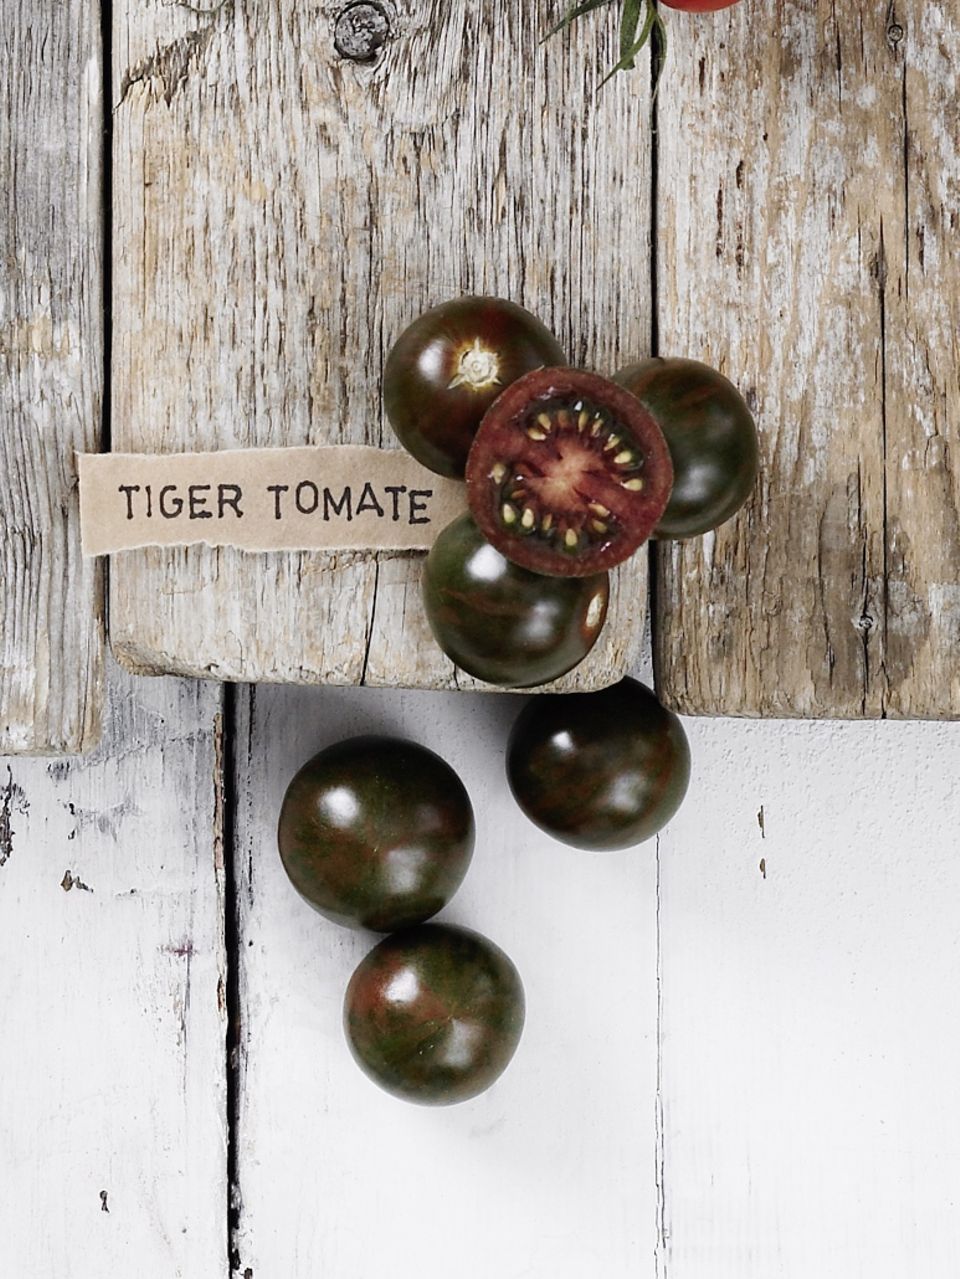 Tomatensorte Tiger-Tomate